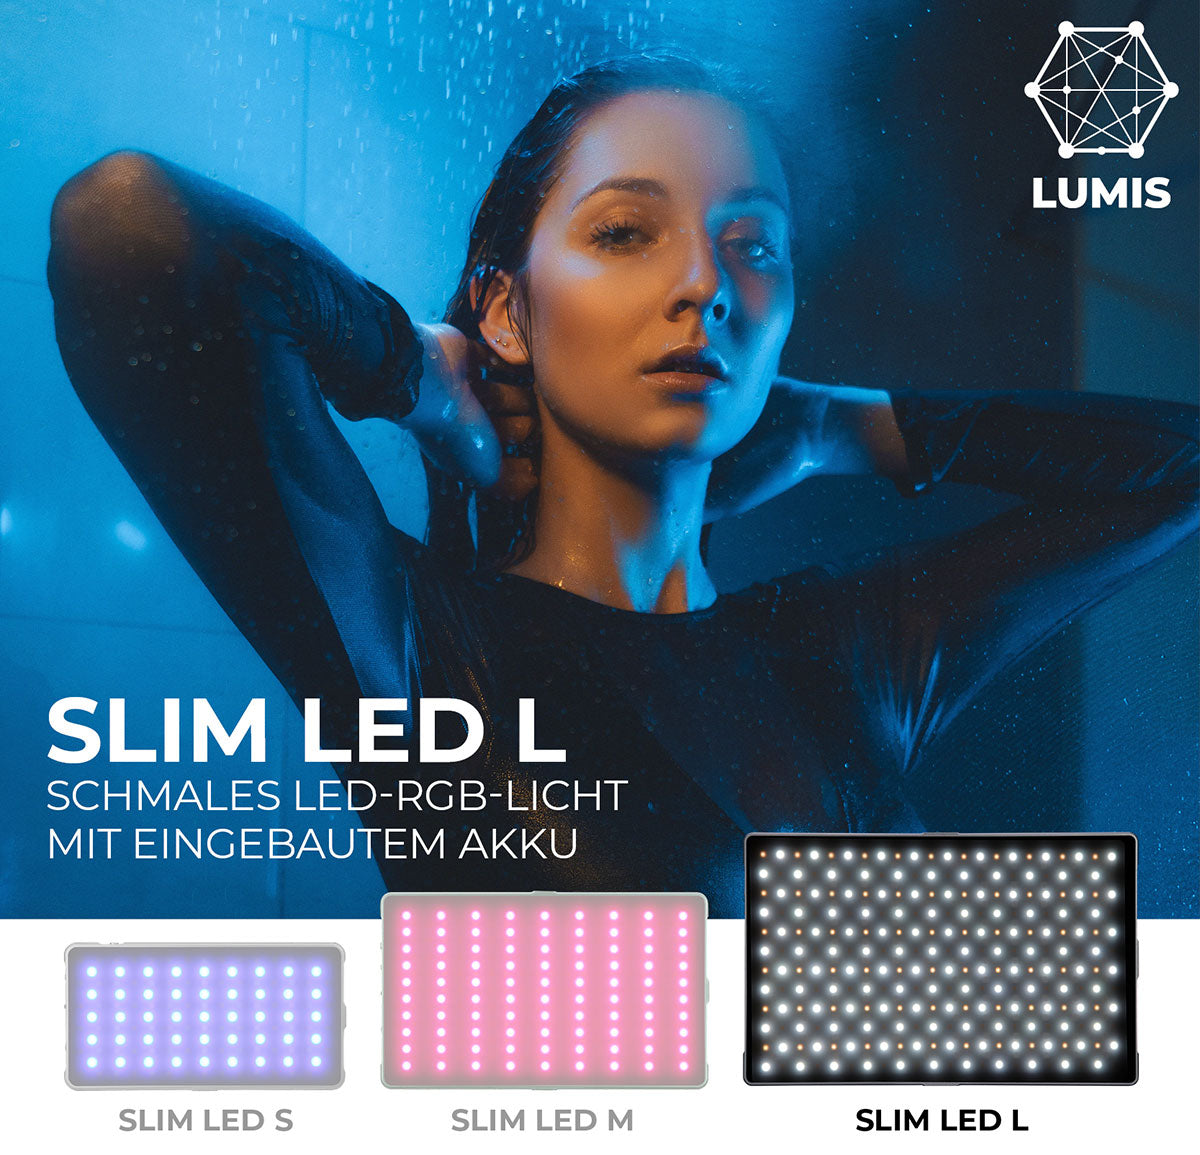 Lumis Slim LED L - flaches RGB LED-Licht mit eingebautem Akku